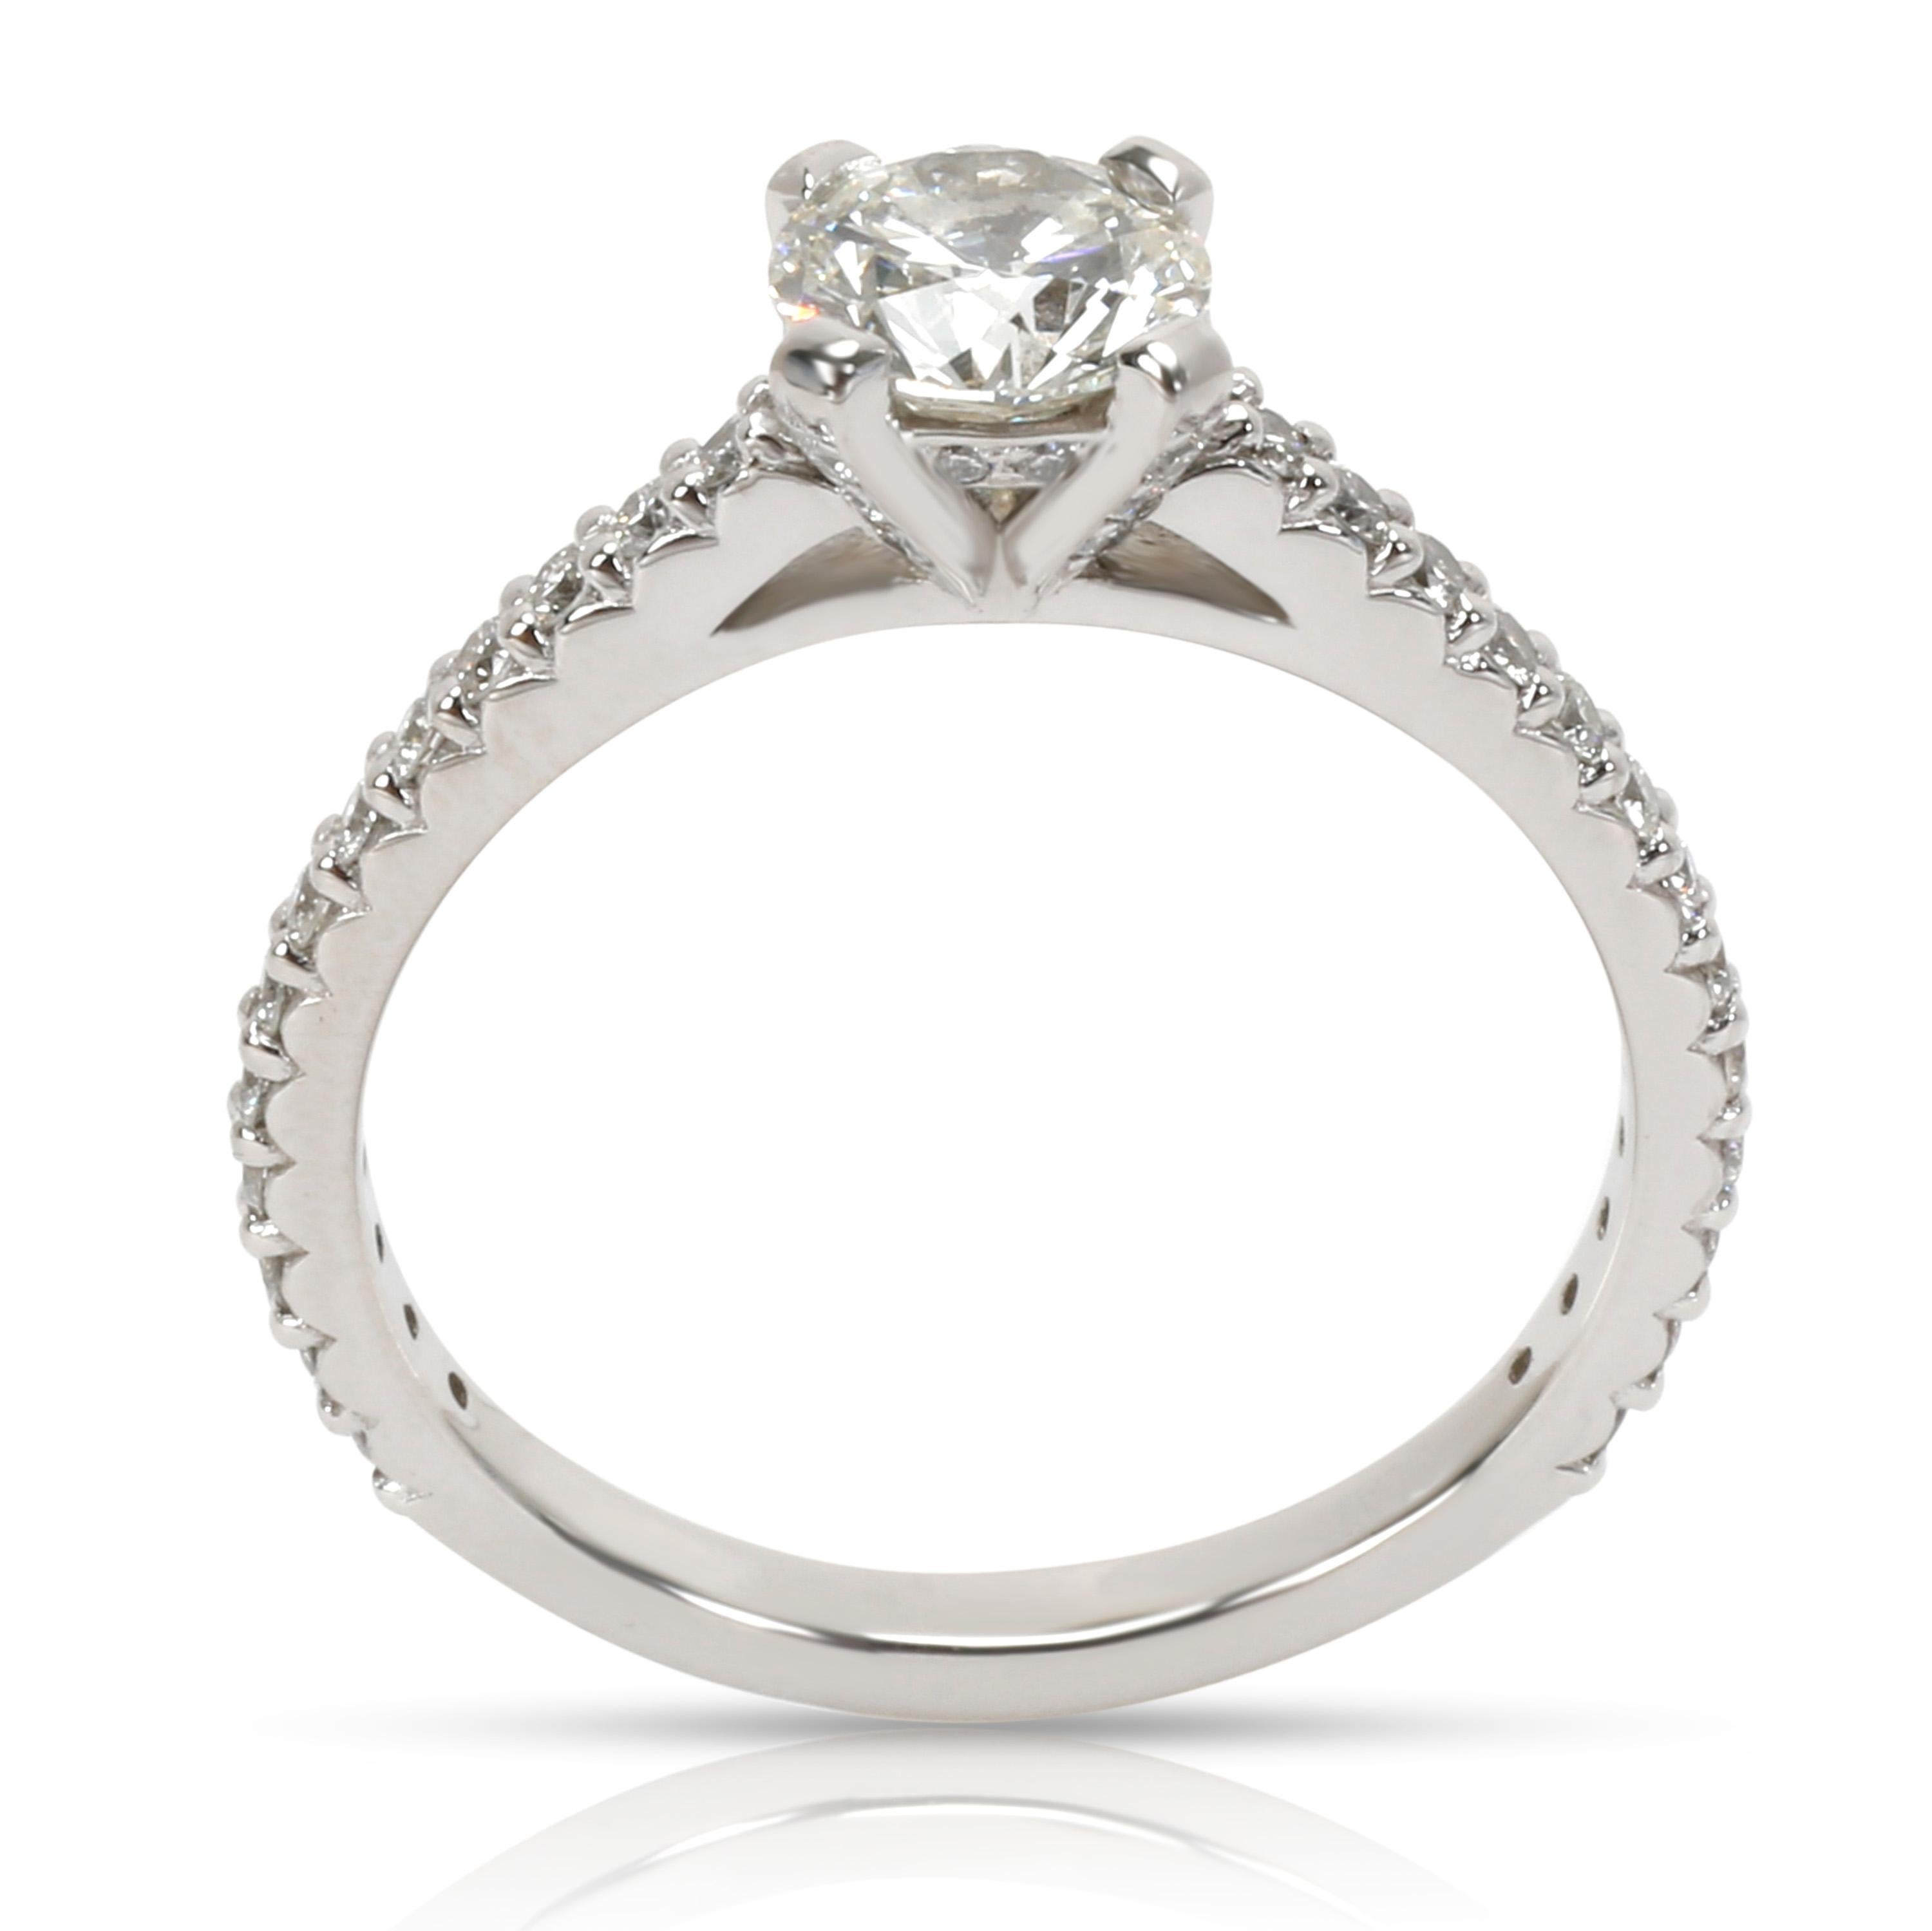 Round Cut GIA Certified Diamond Engagement Ring in Platinum